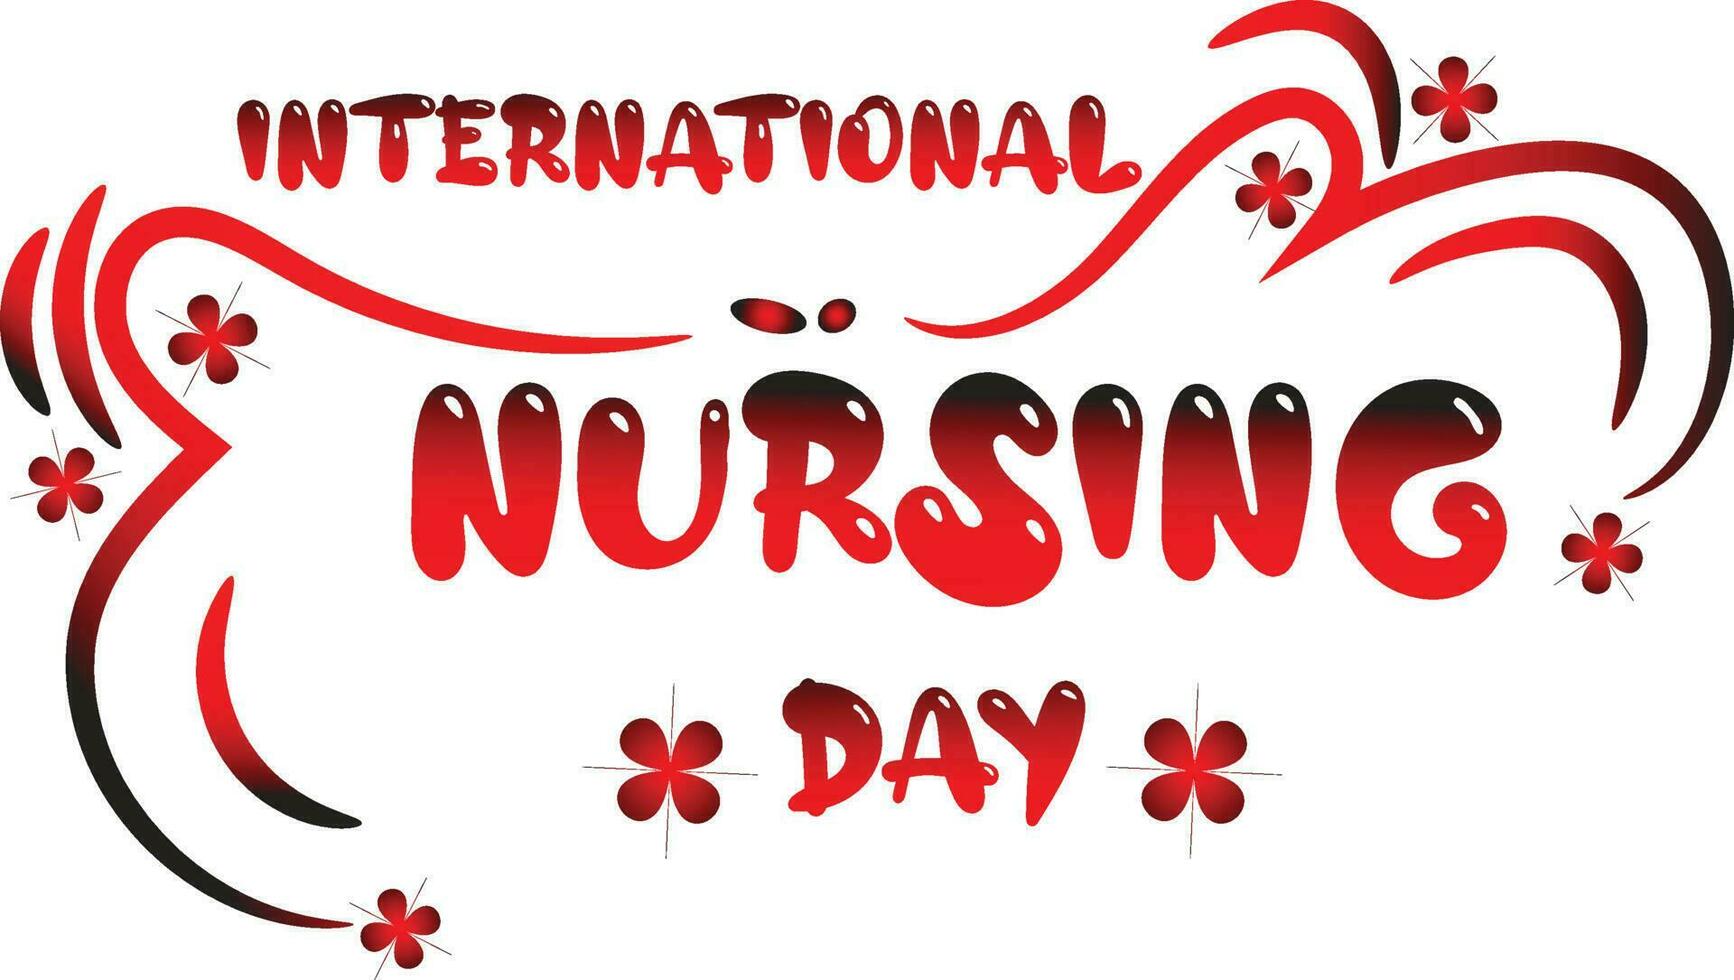 World international nursing day vector